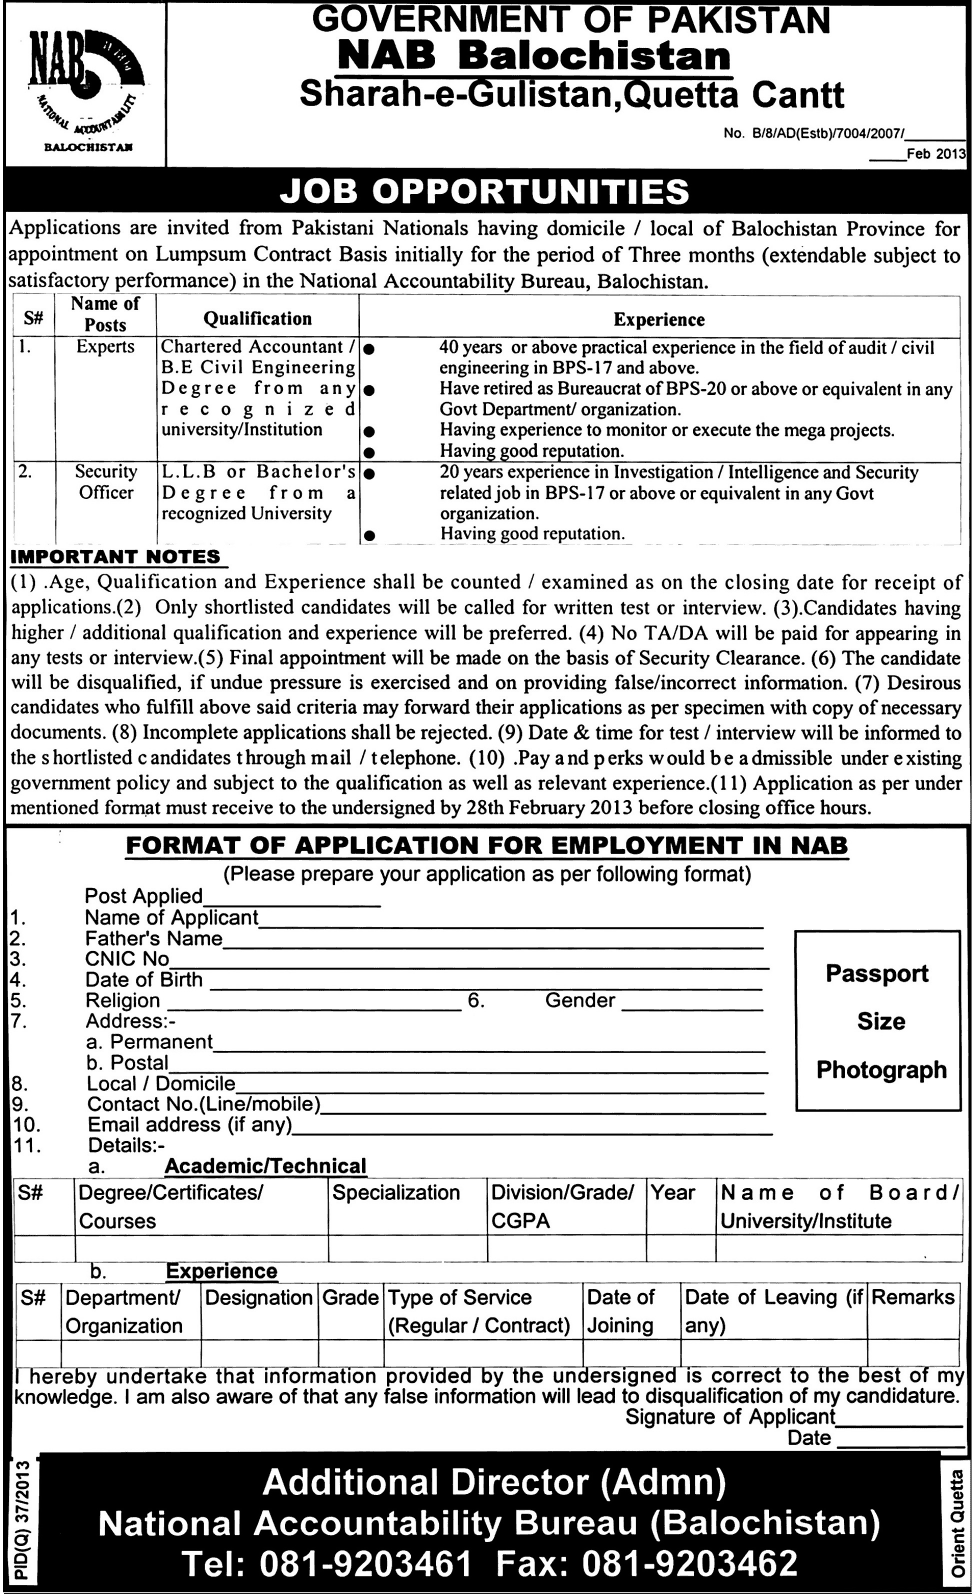 NAB Balochistan Jobs 2013 Application Form